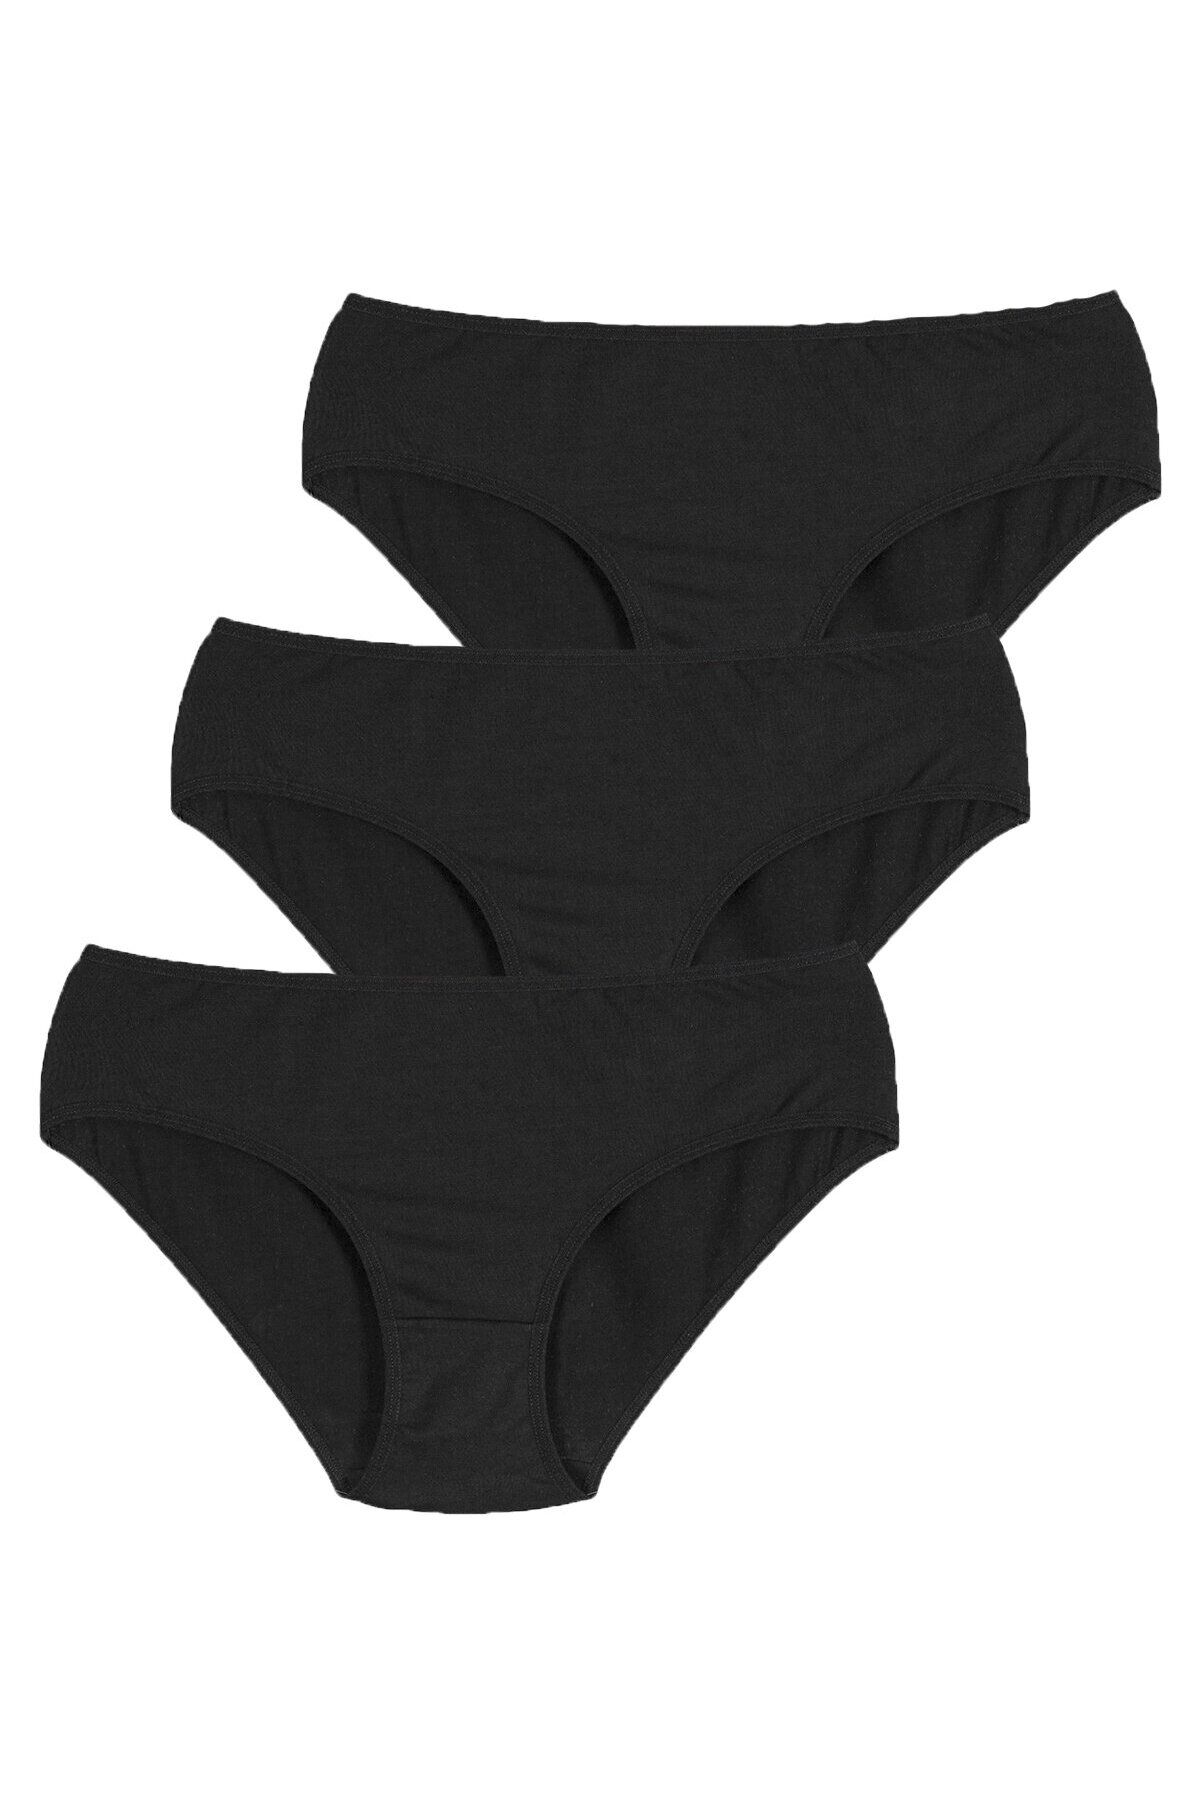 Papatya Women's Laser Cut Panties 6 Pieces Seamless Flexible Non